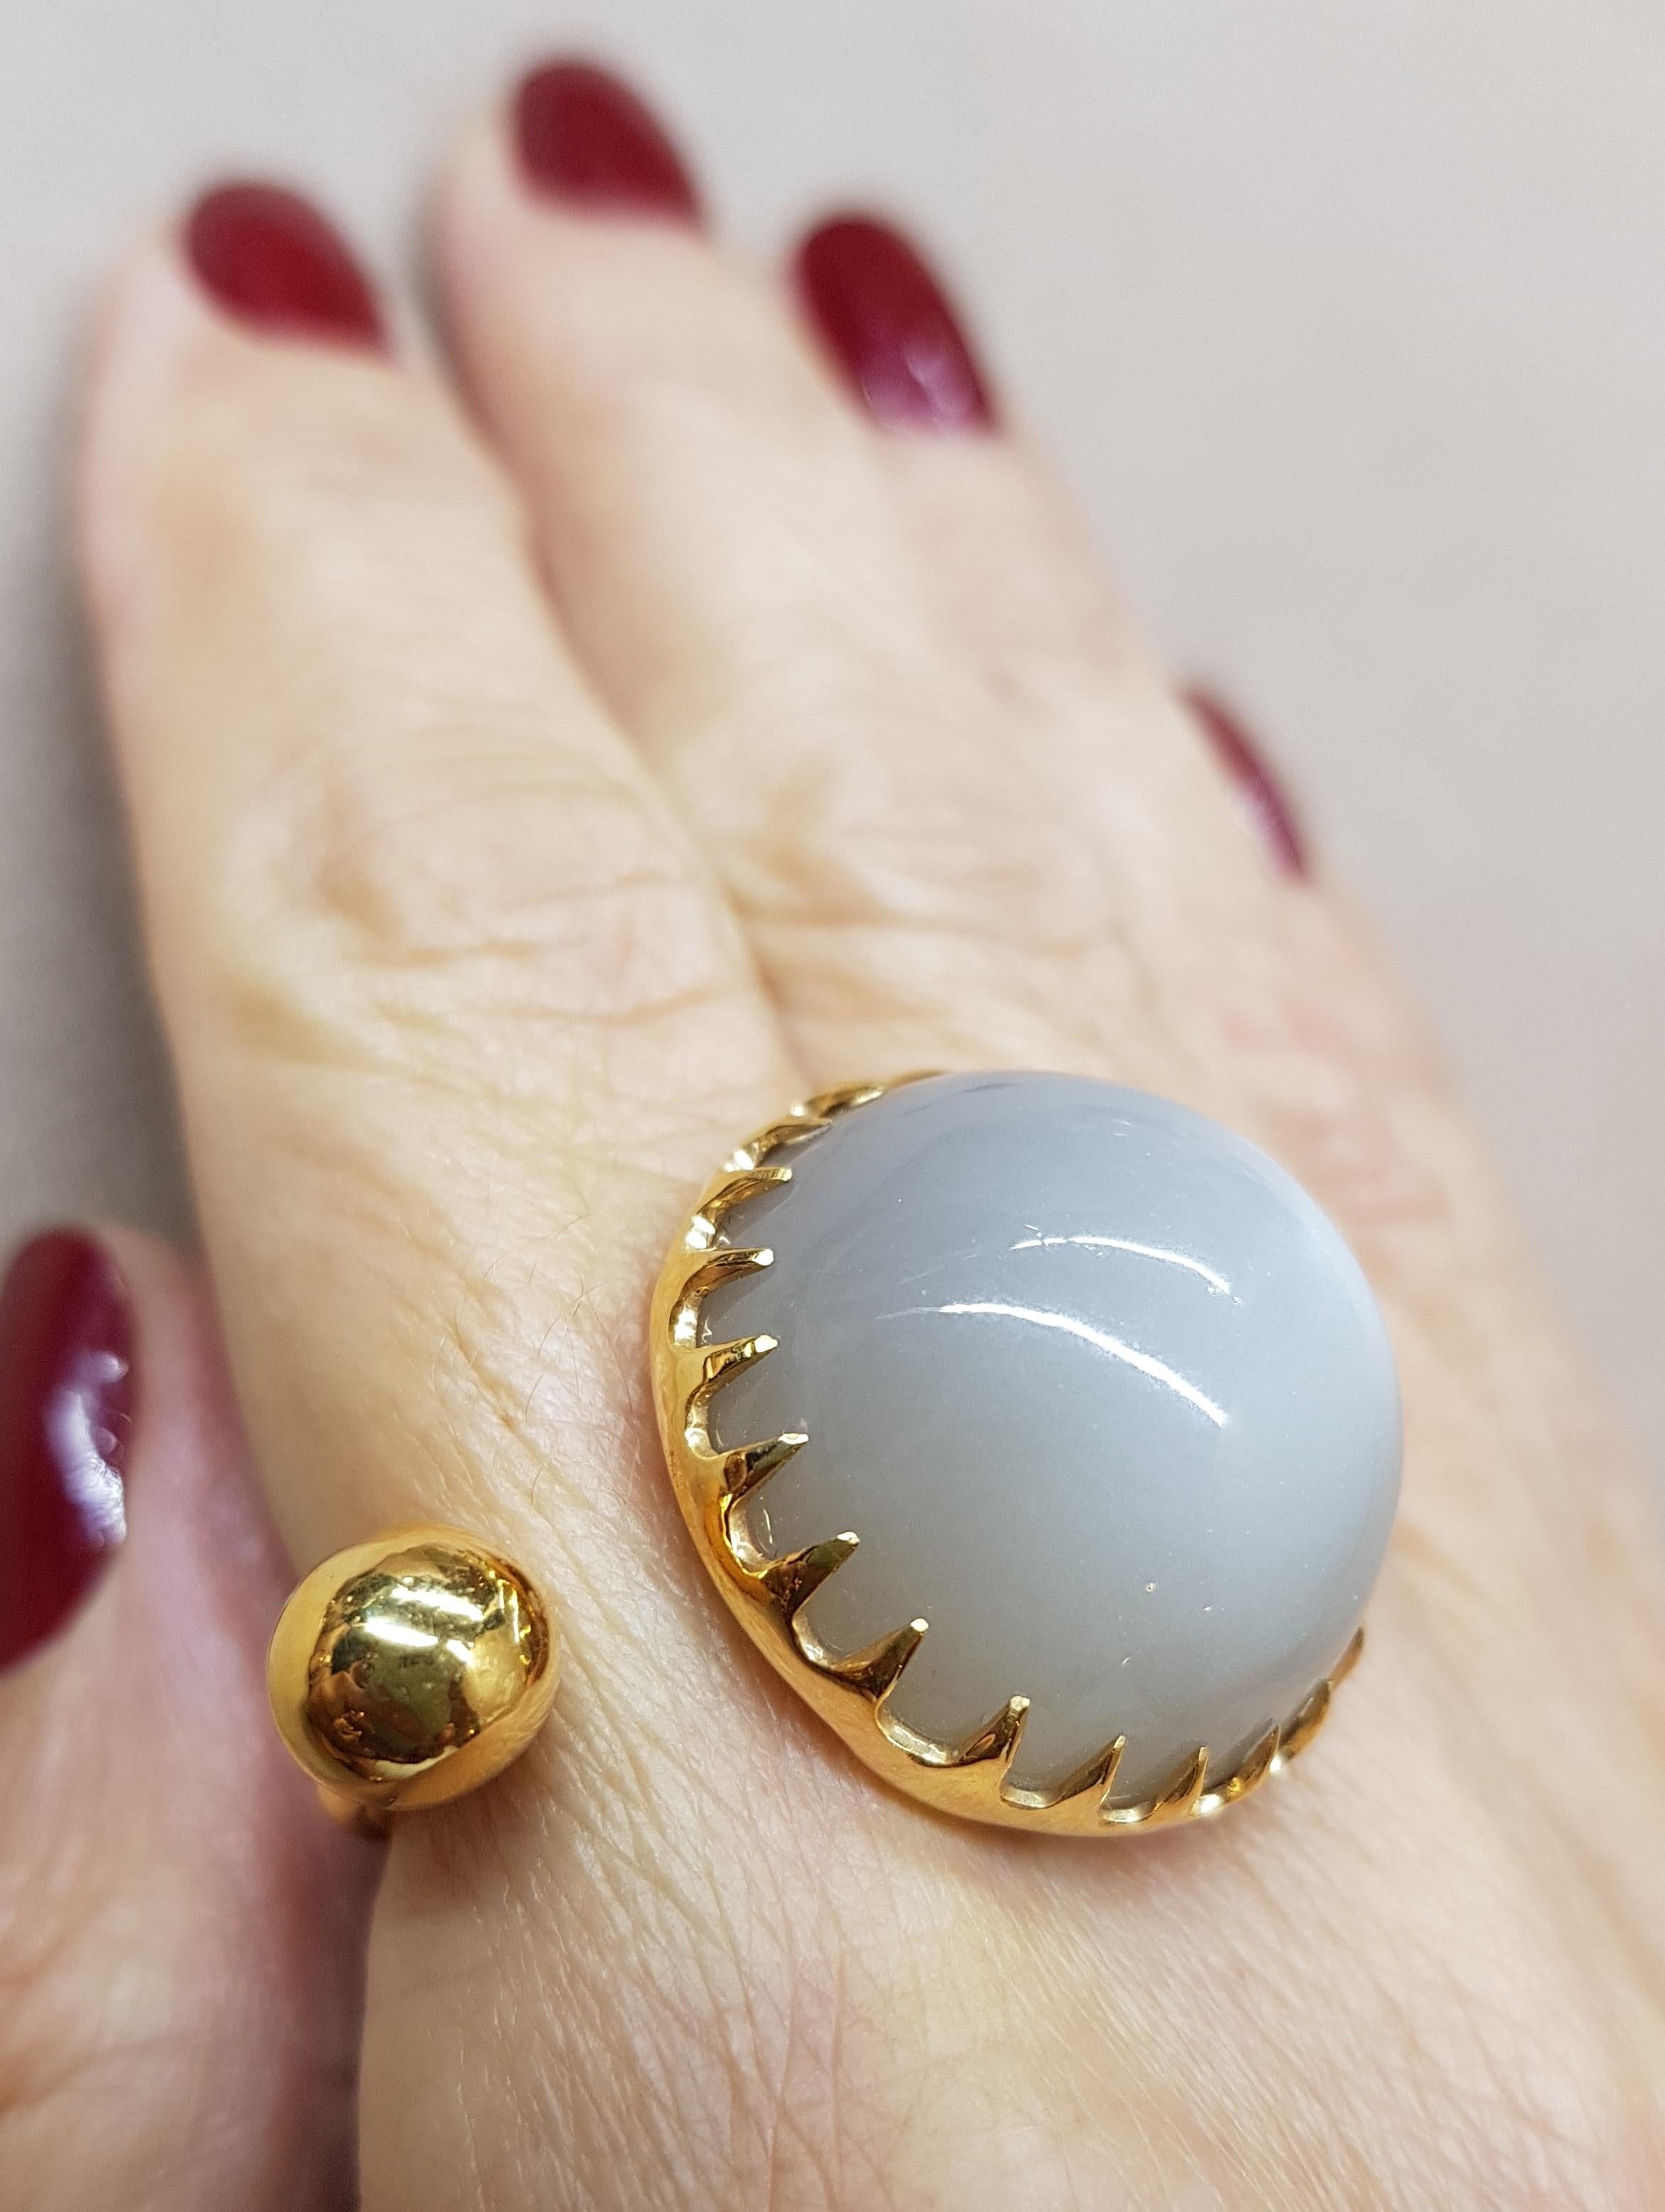 18 Karat Gold Moonstone Ring
32,25 Carat Moonstone
Ring Size :14